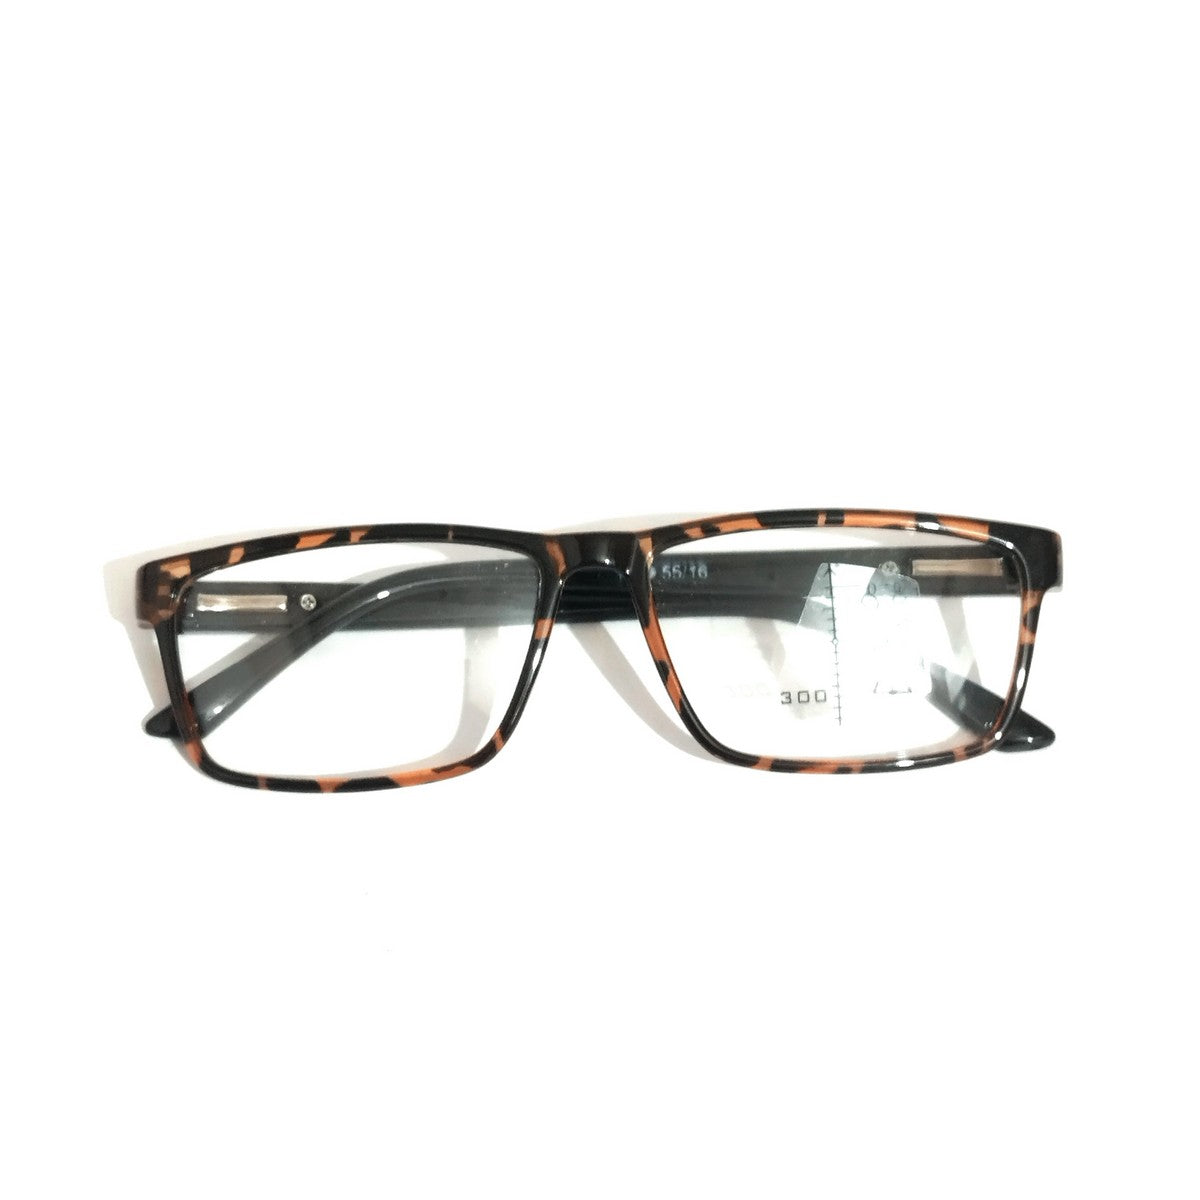 Tortoiseshell Tradition - Classic Rectangular Progressive Multifocal Eyeglasses